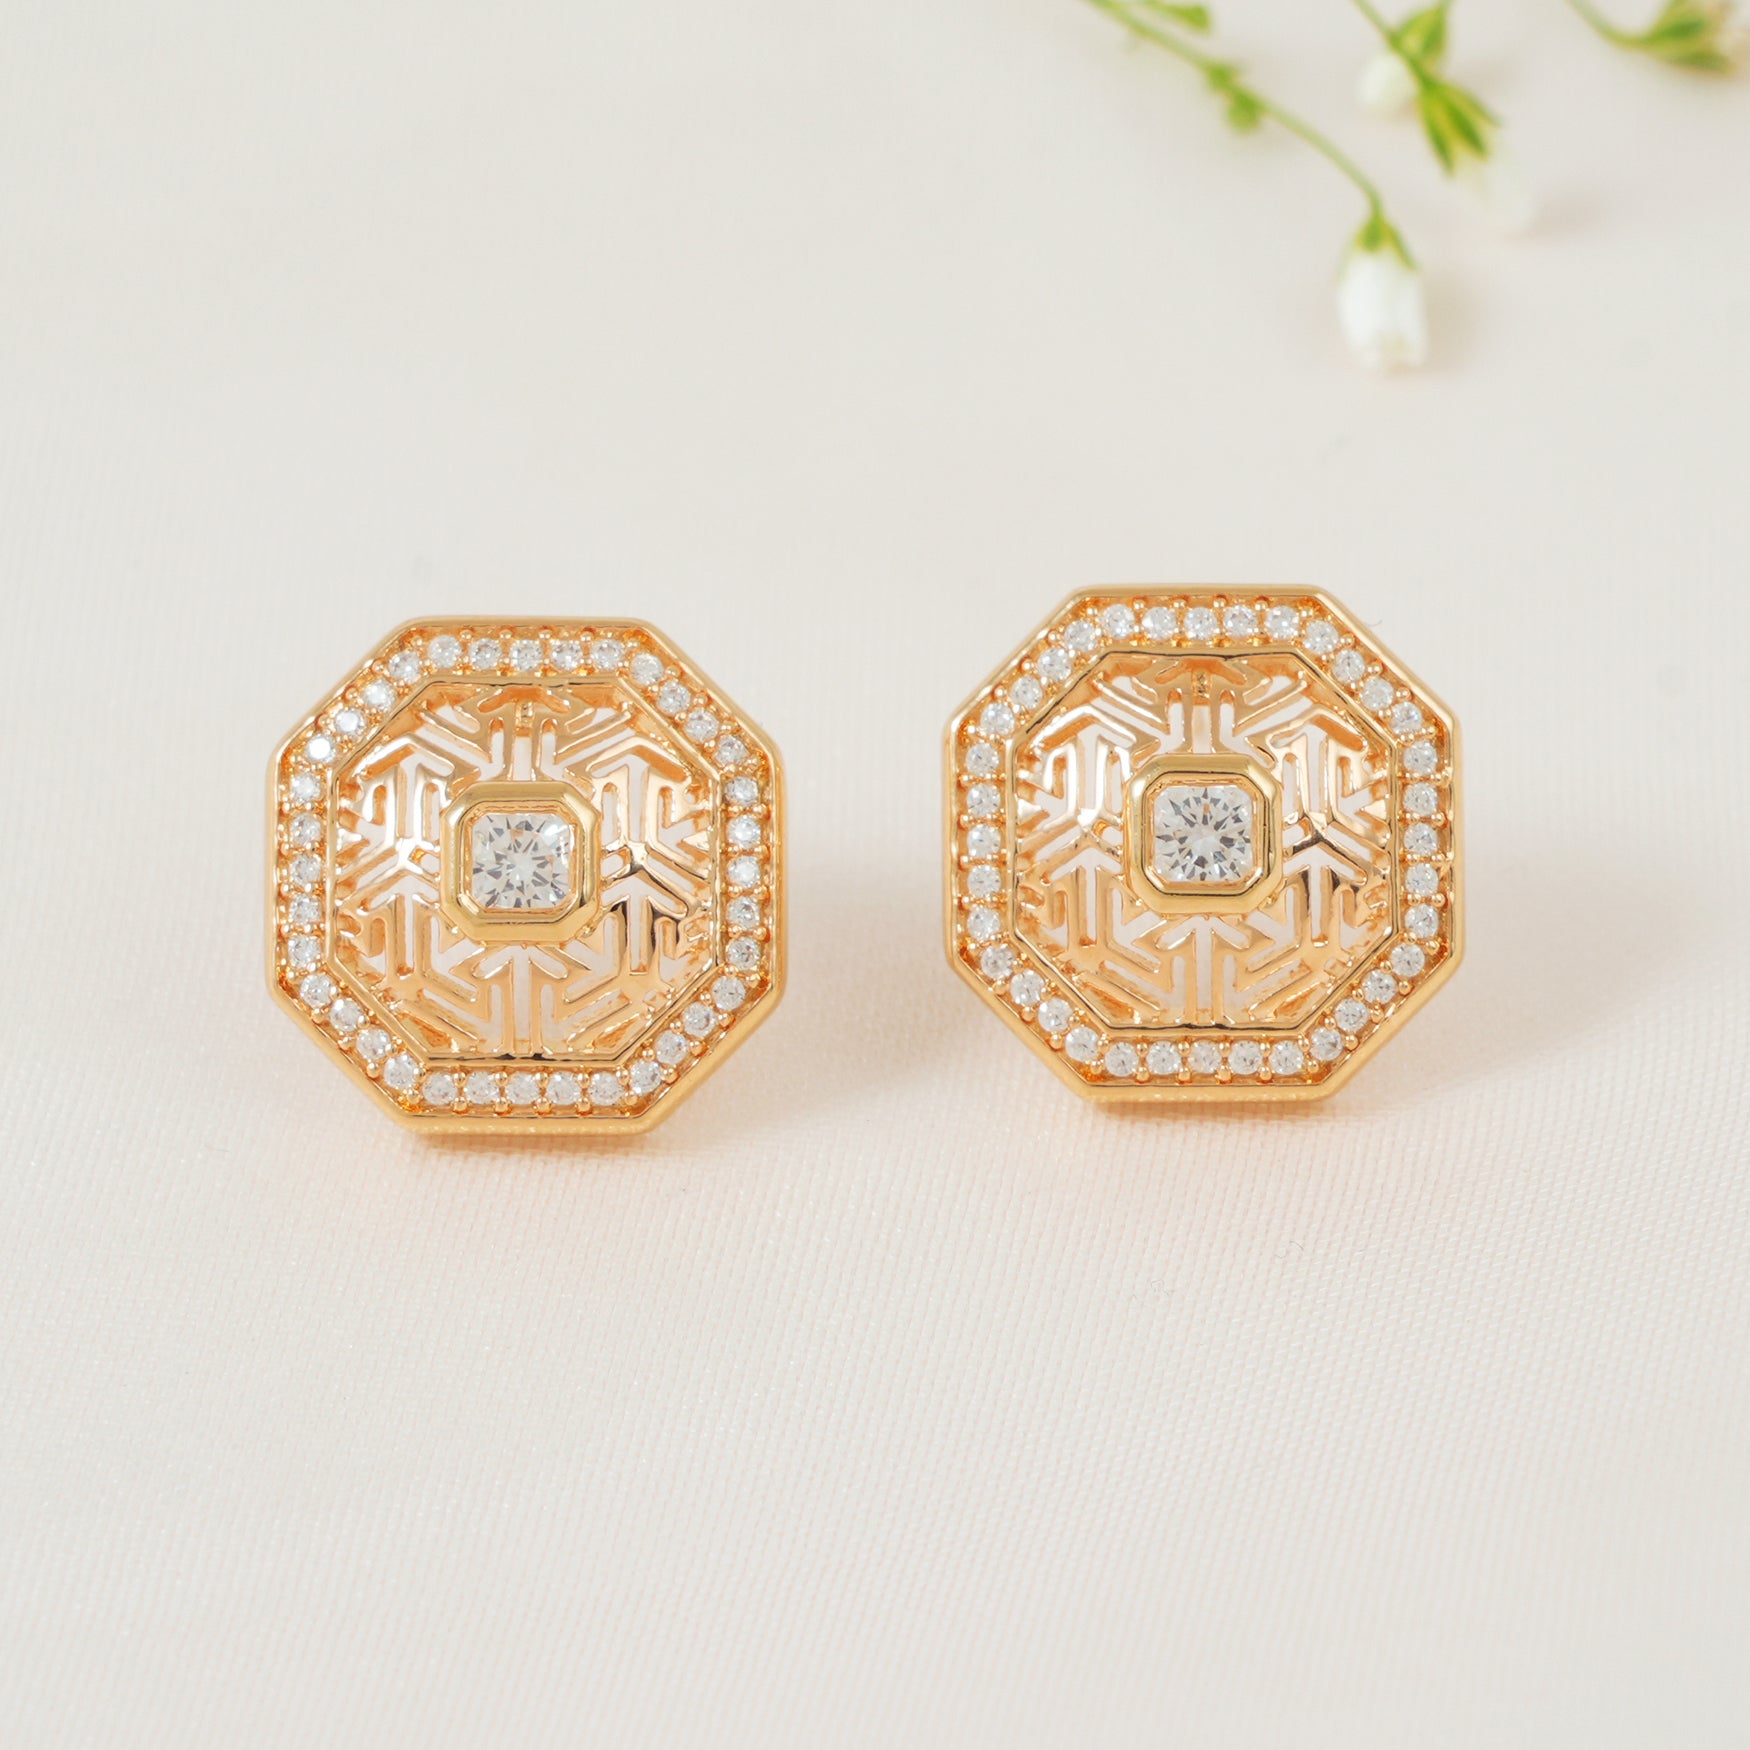 Elegant octagon gold plated CZ diamond pendant set